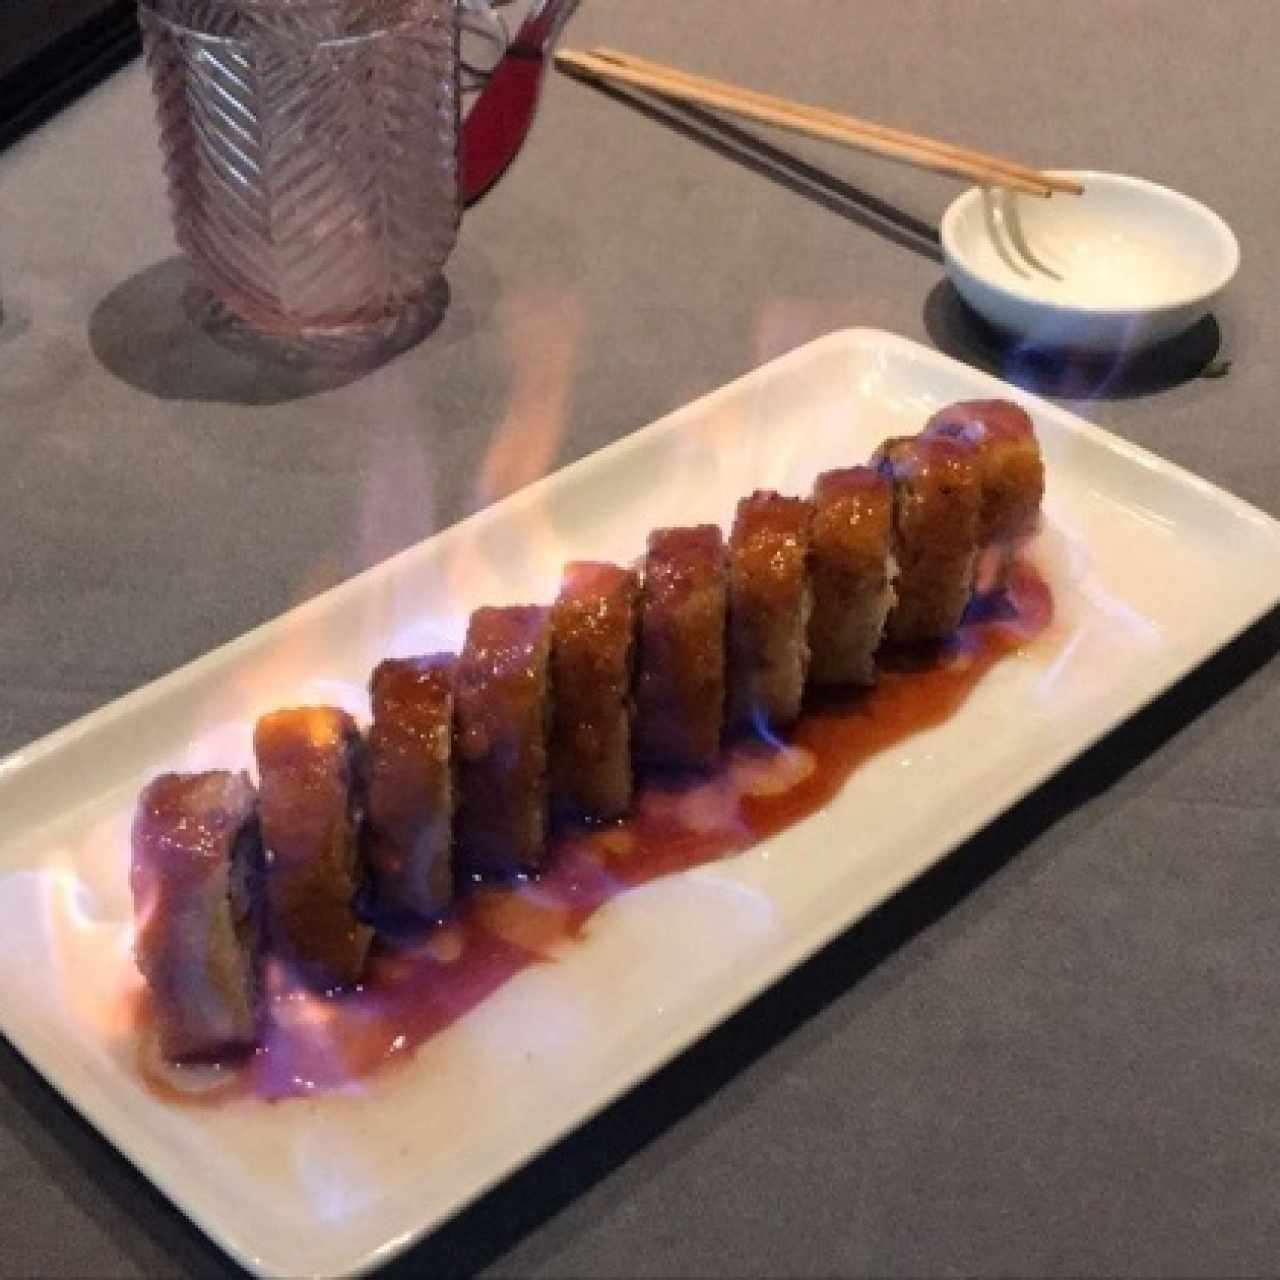 Sushi rolls/Makis - ZK roll